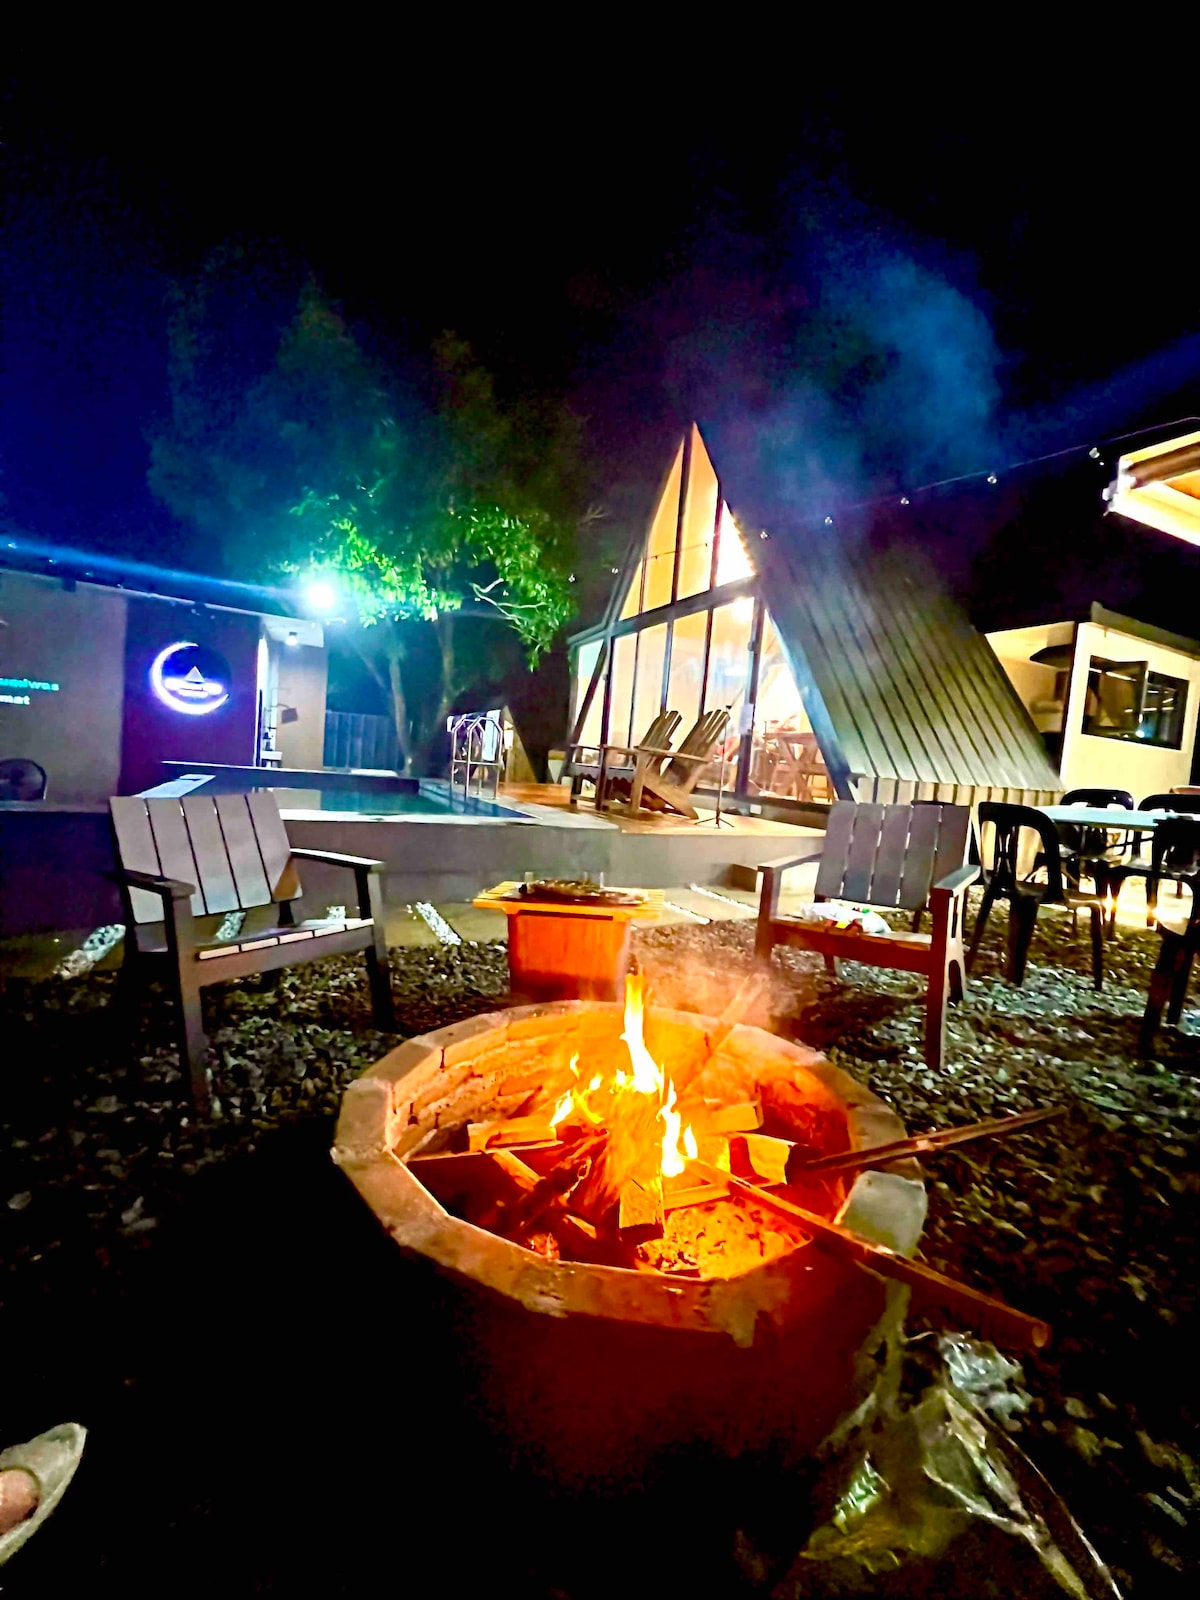 Moonlight Cabin | Modern A-Frame Exclusive Villa